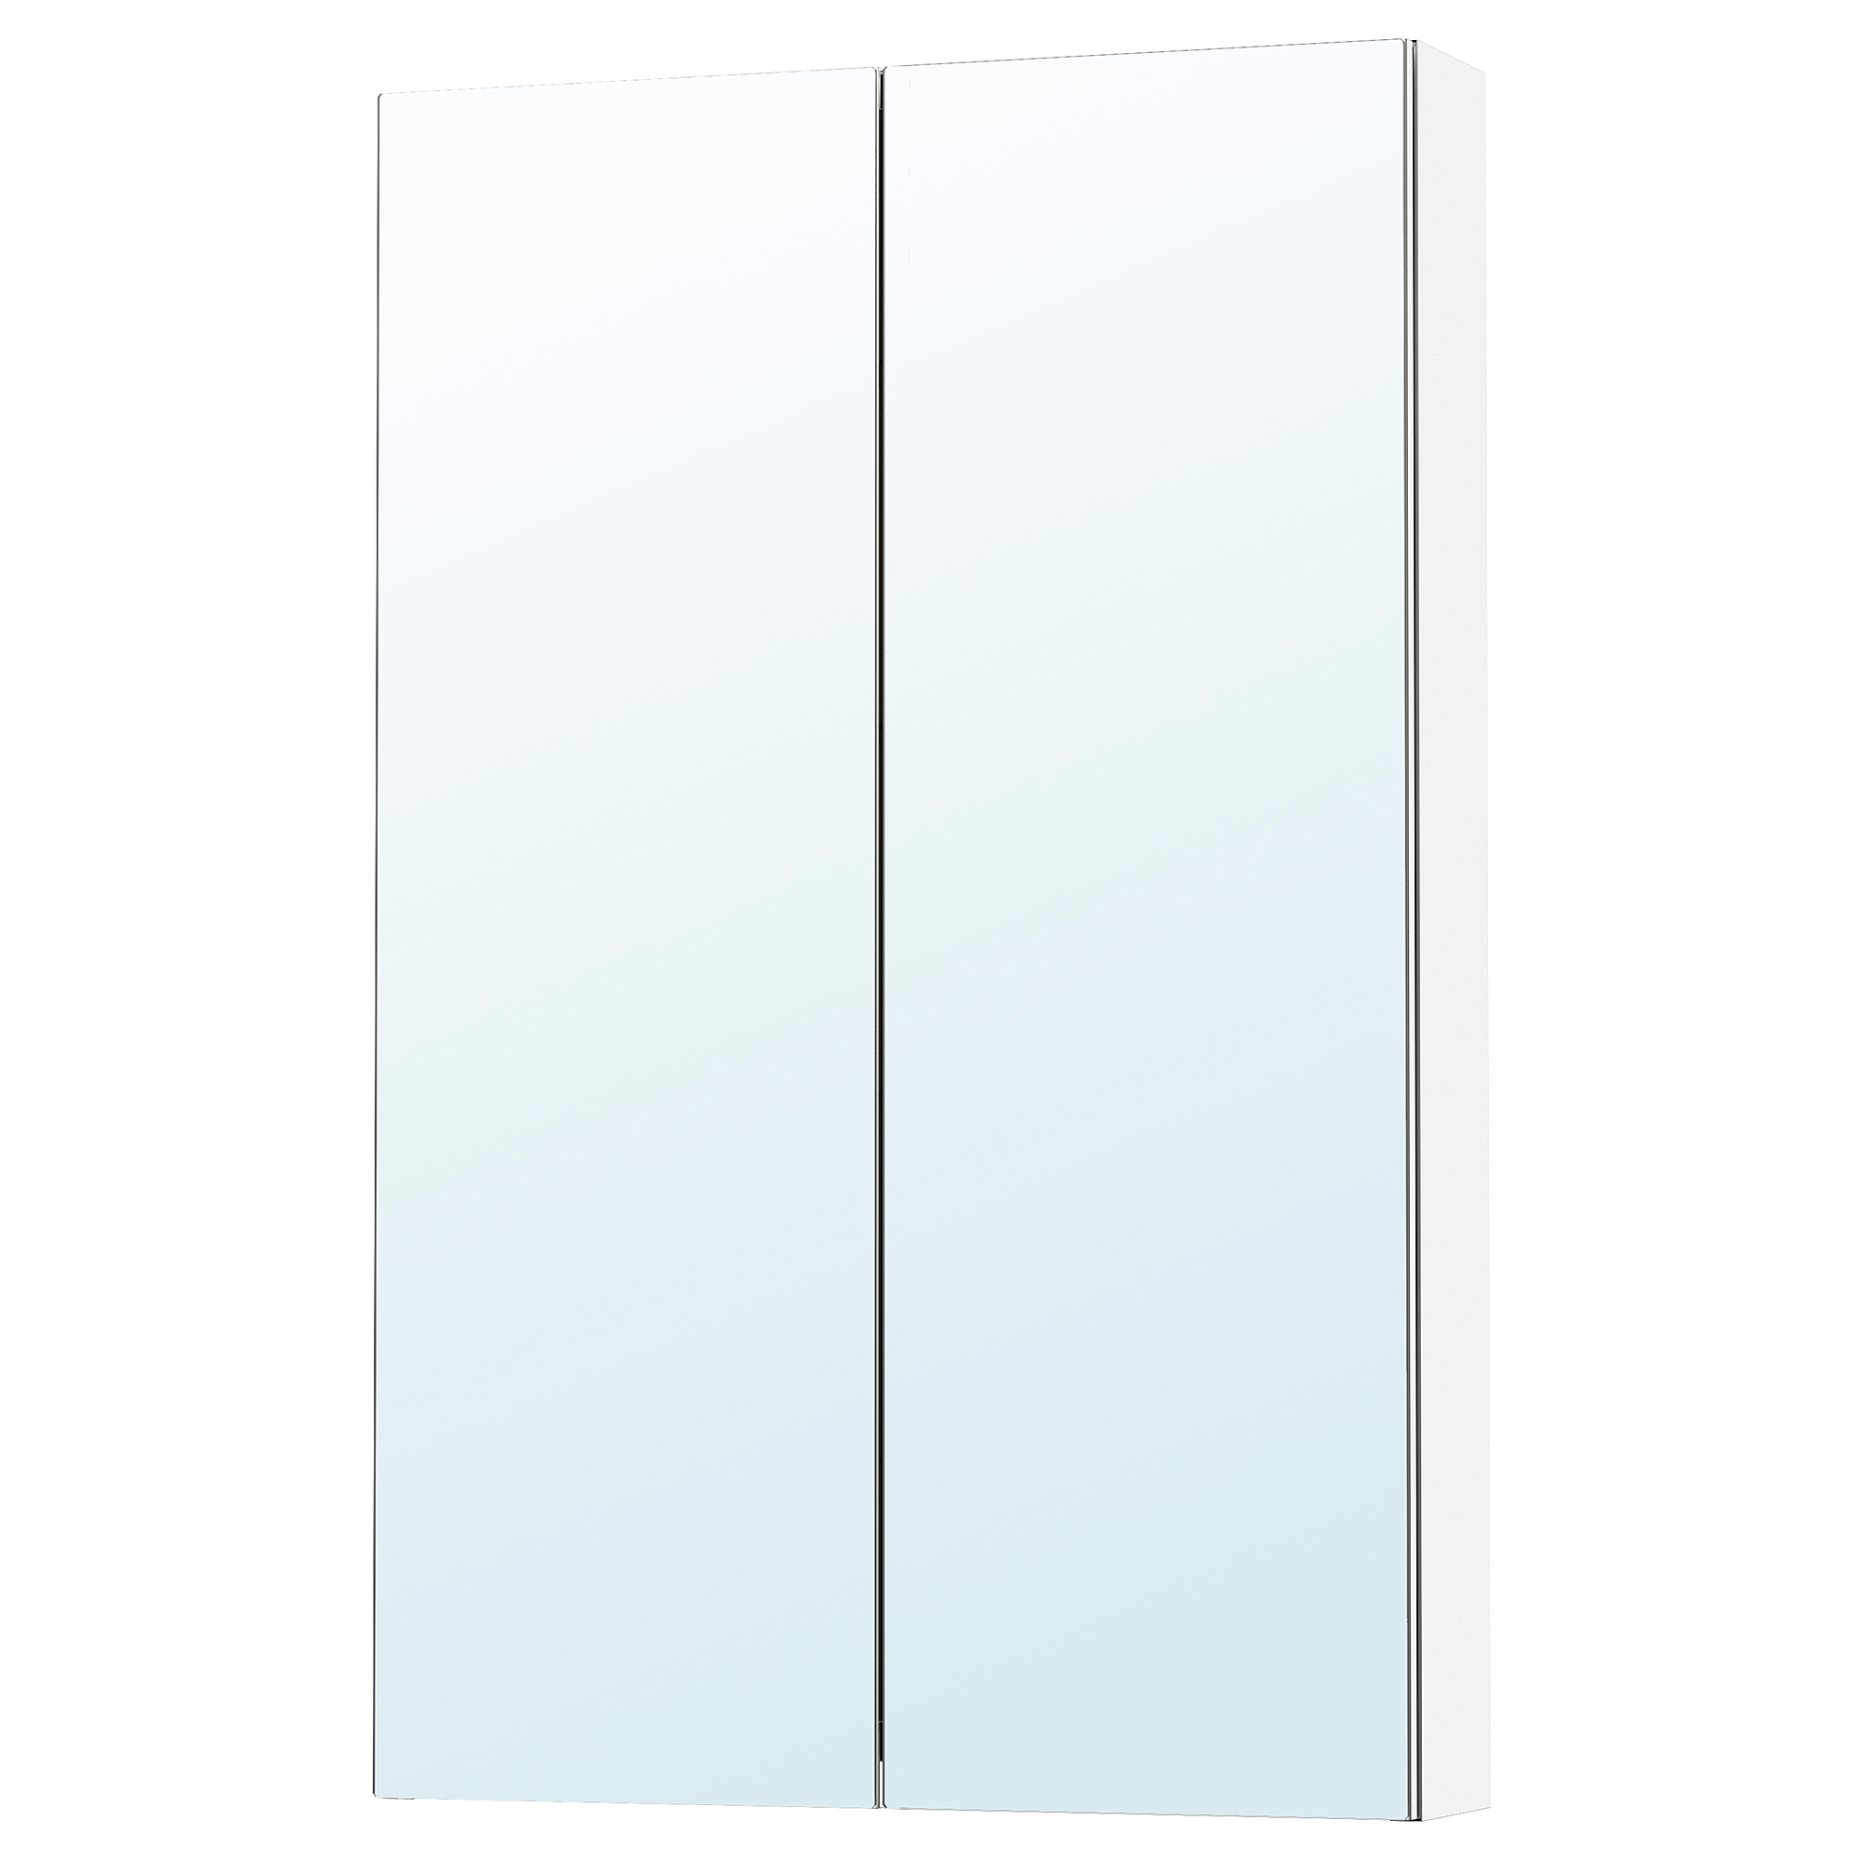 LETTAN, ντουλάπι καθρέφτη με πόρτες, 60x15x95 cm, 005.349.22